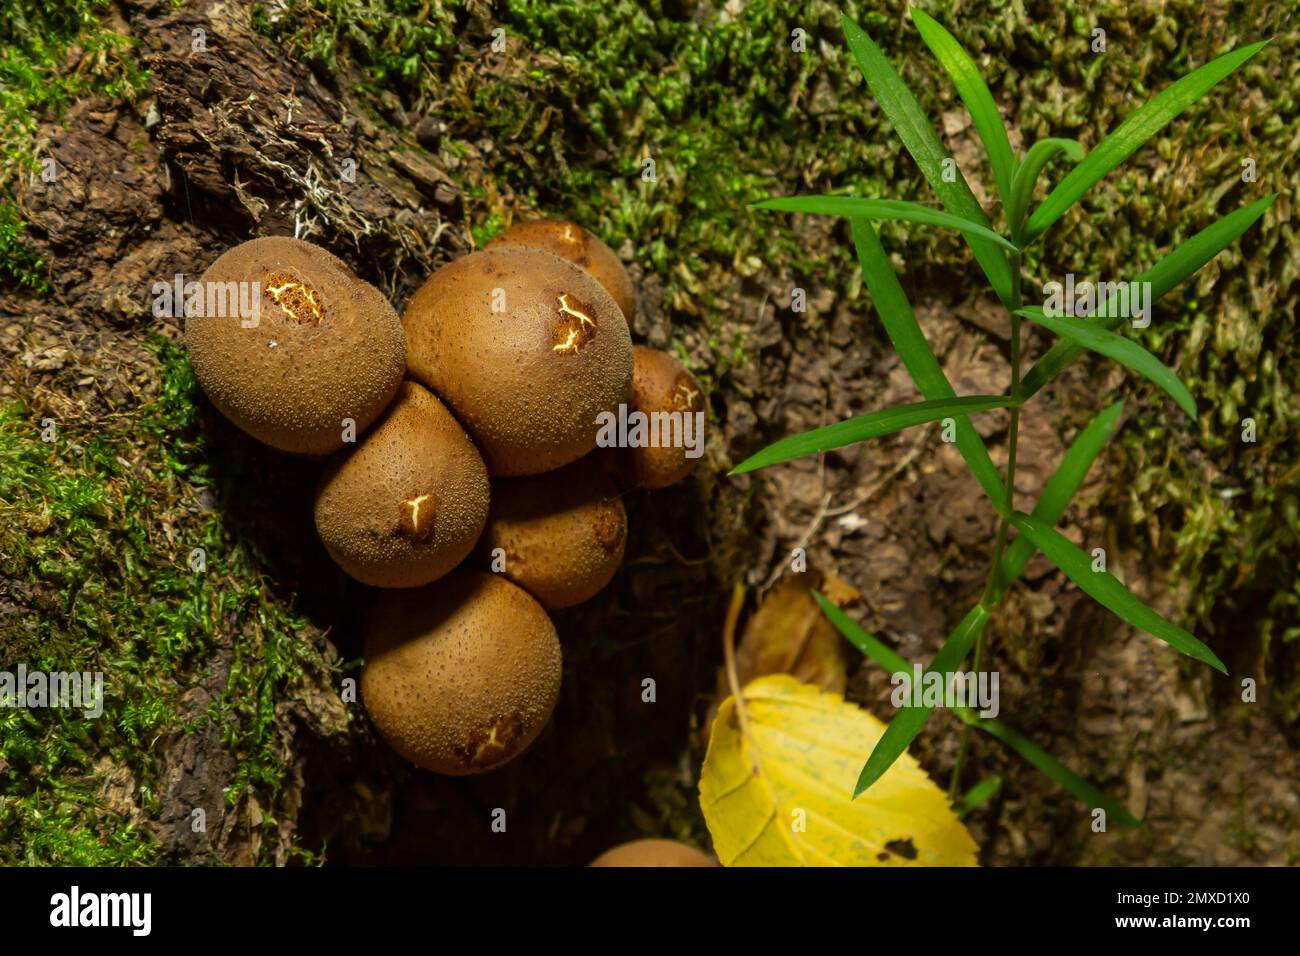 Forest mushroom. Common downy mushroom - Lycoperdon perlatum - growing in green moss in autumn forest. Stock Photo